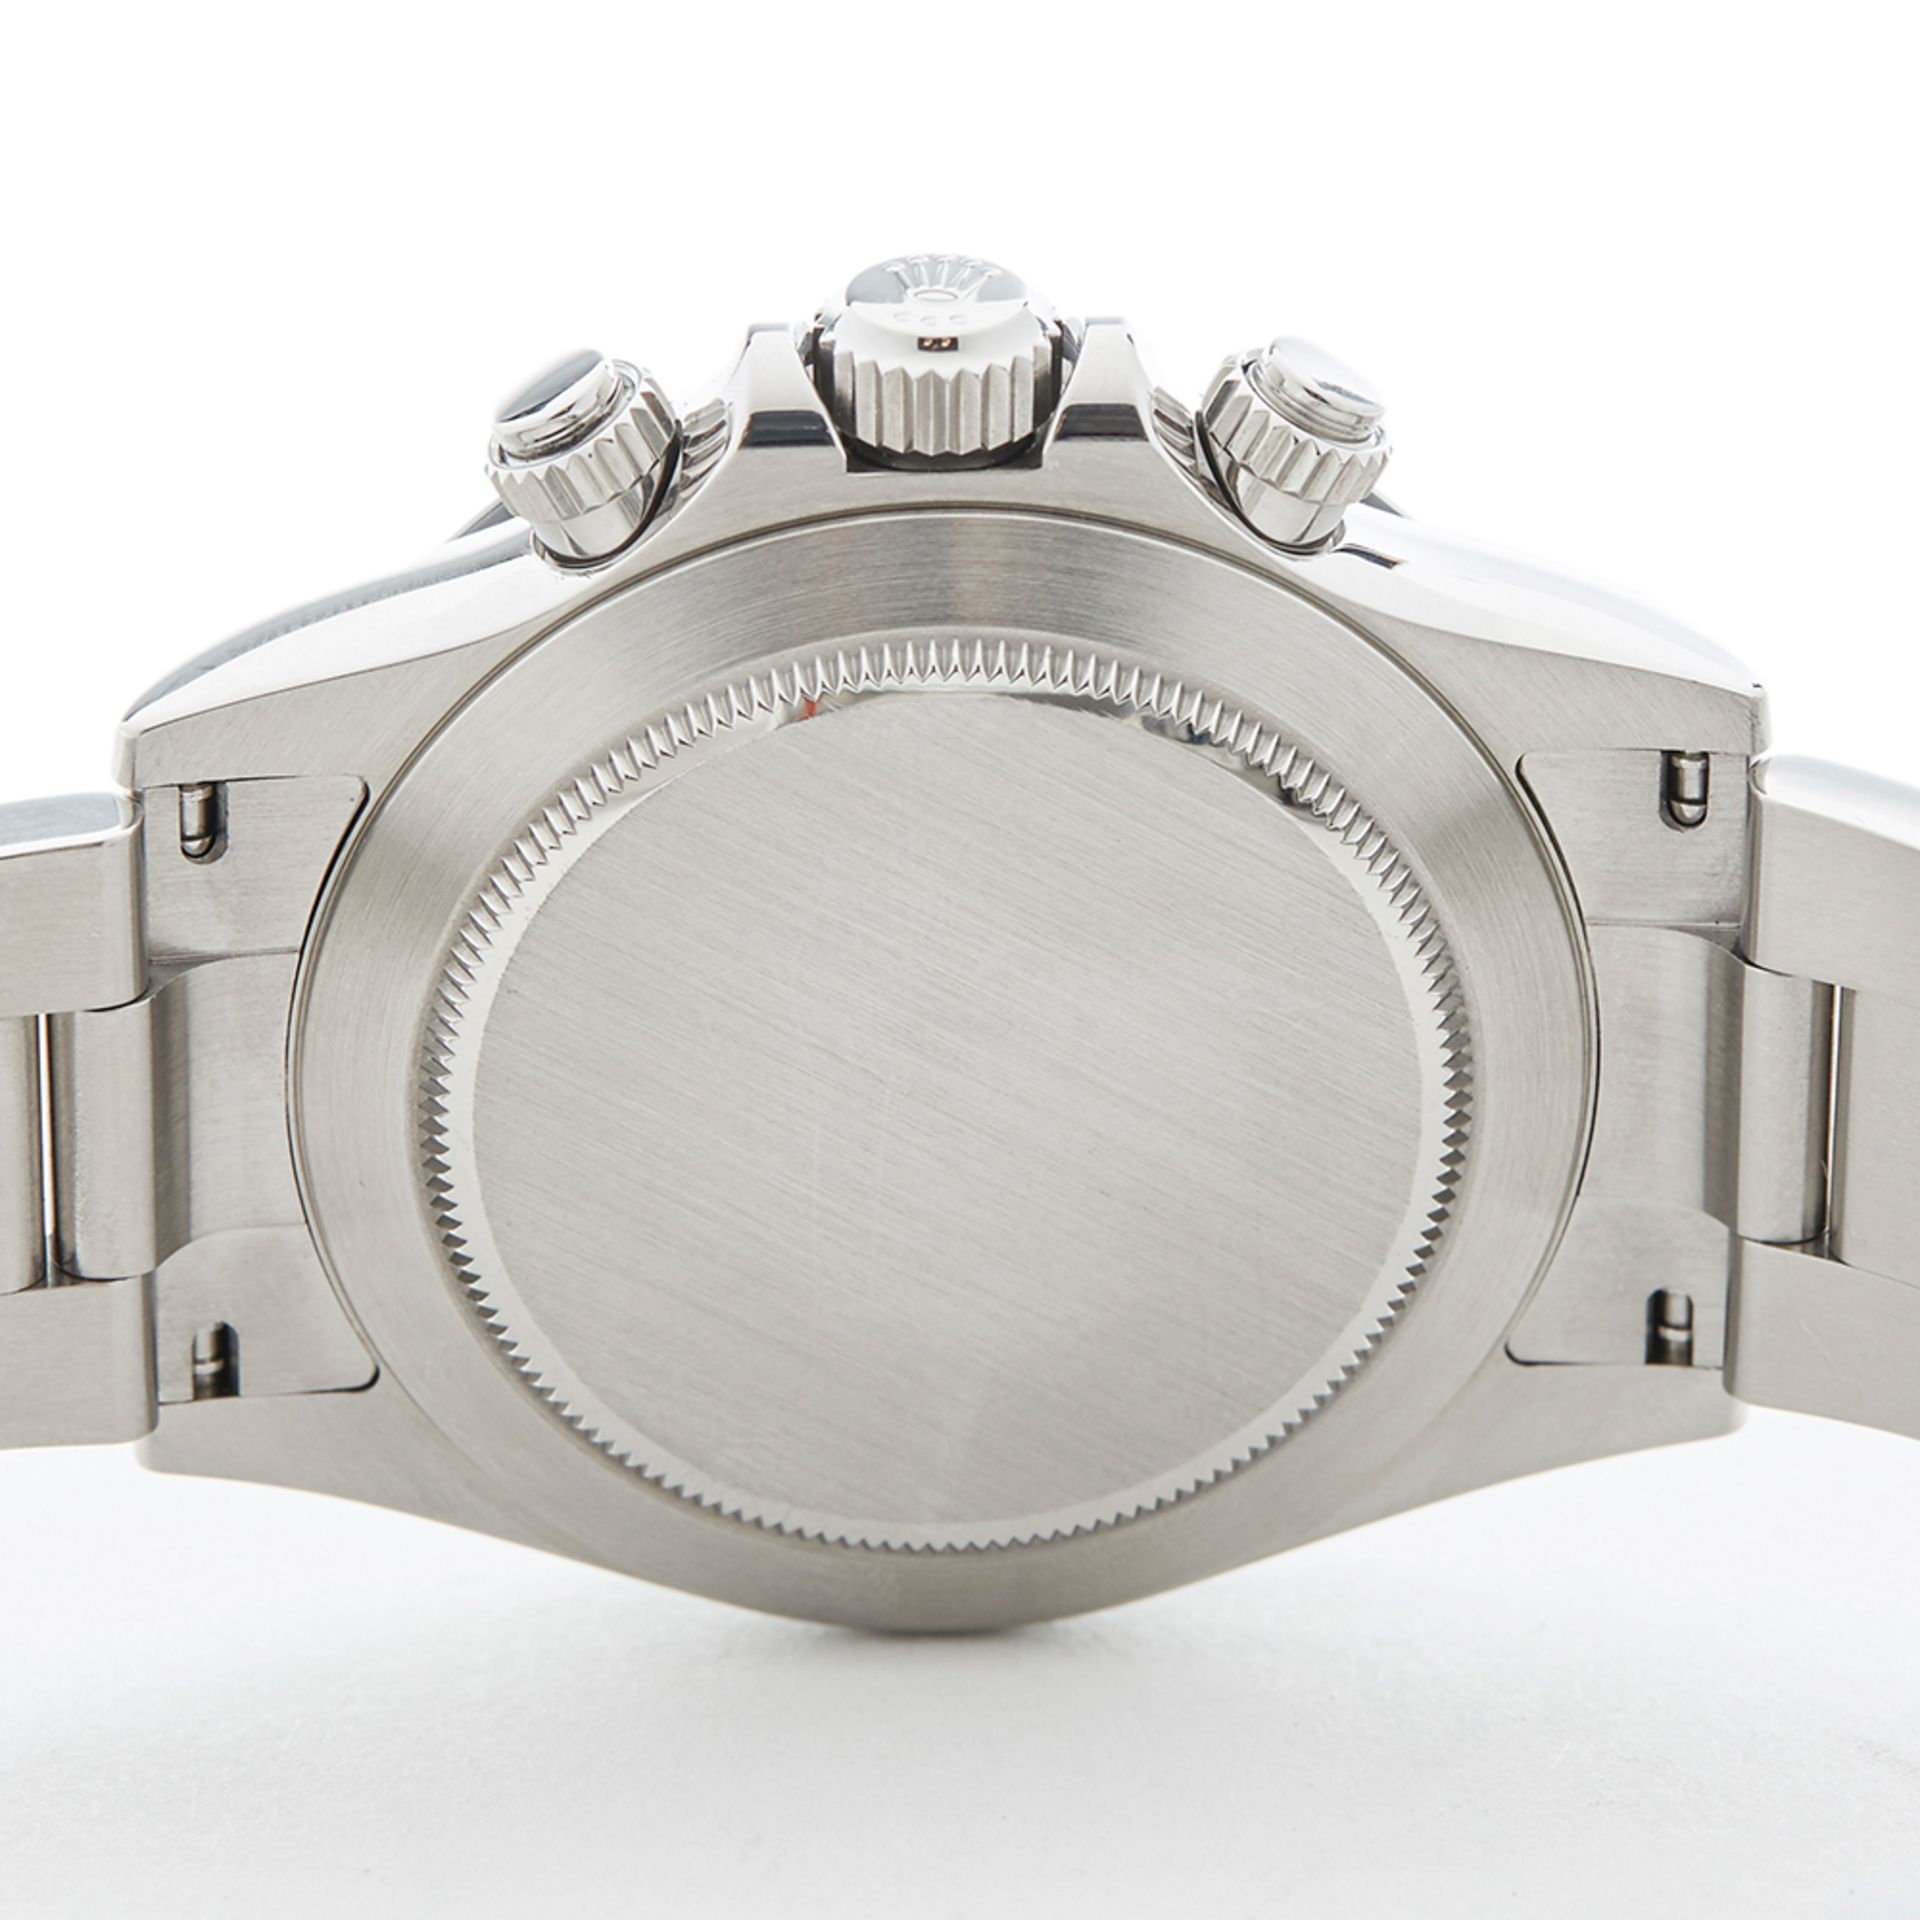 Rolex Daytona Chronograph 40mm Stainless Steel - 116500LN - Image 8 of 9